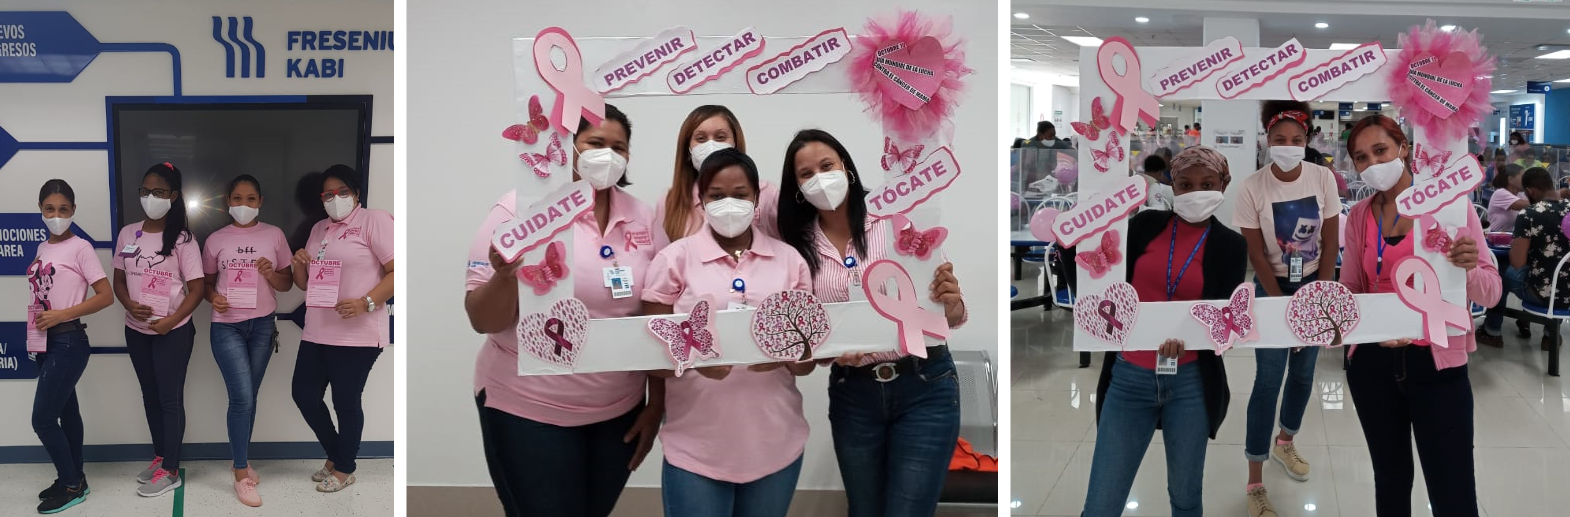 Fresenius Kabi Haina, Dominican Republic - Breast Cancer Awareness Month - Campaign